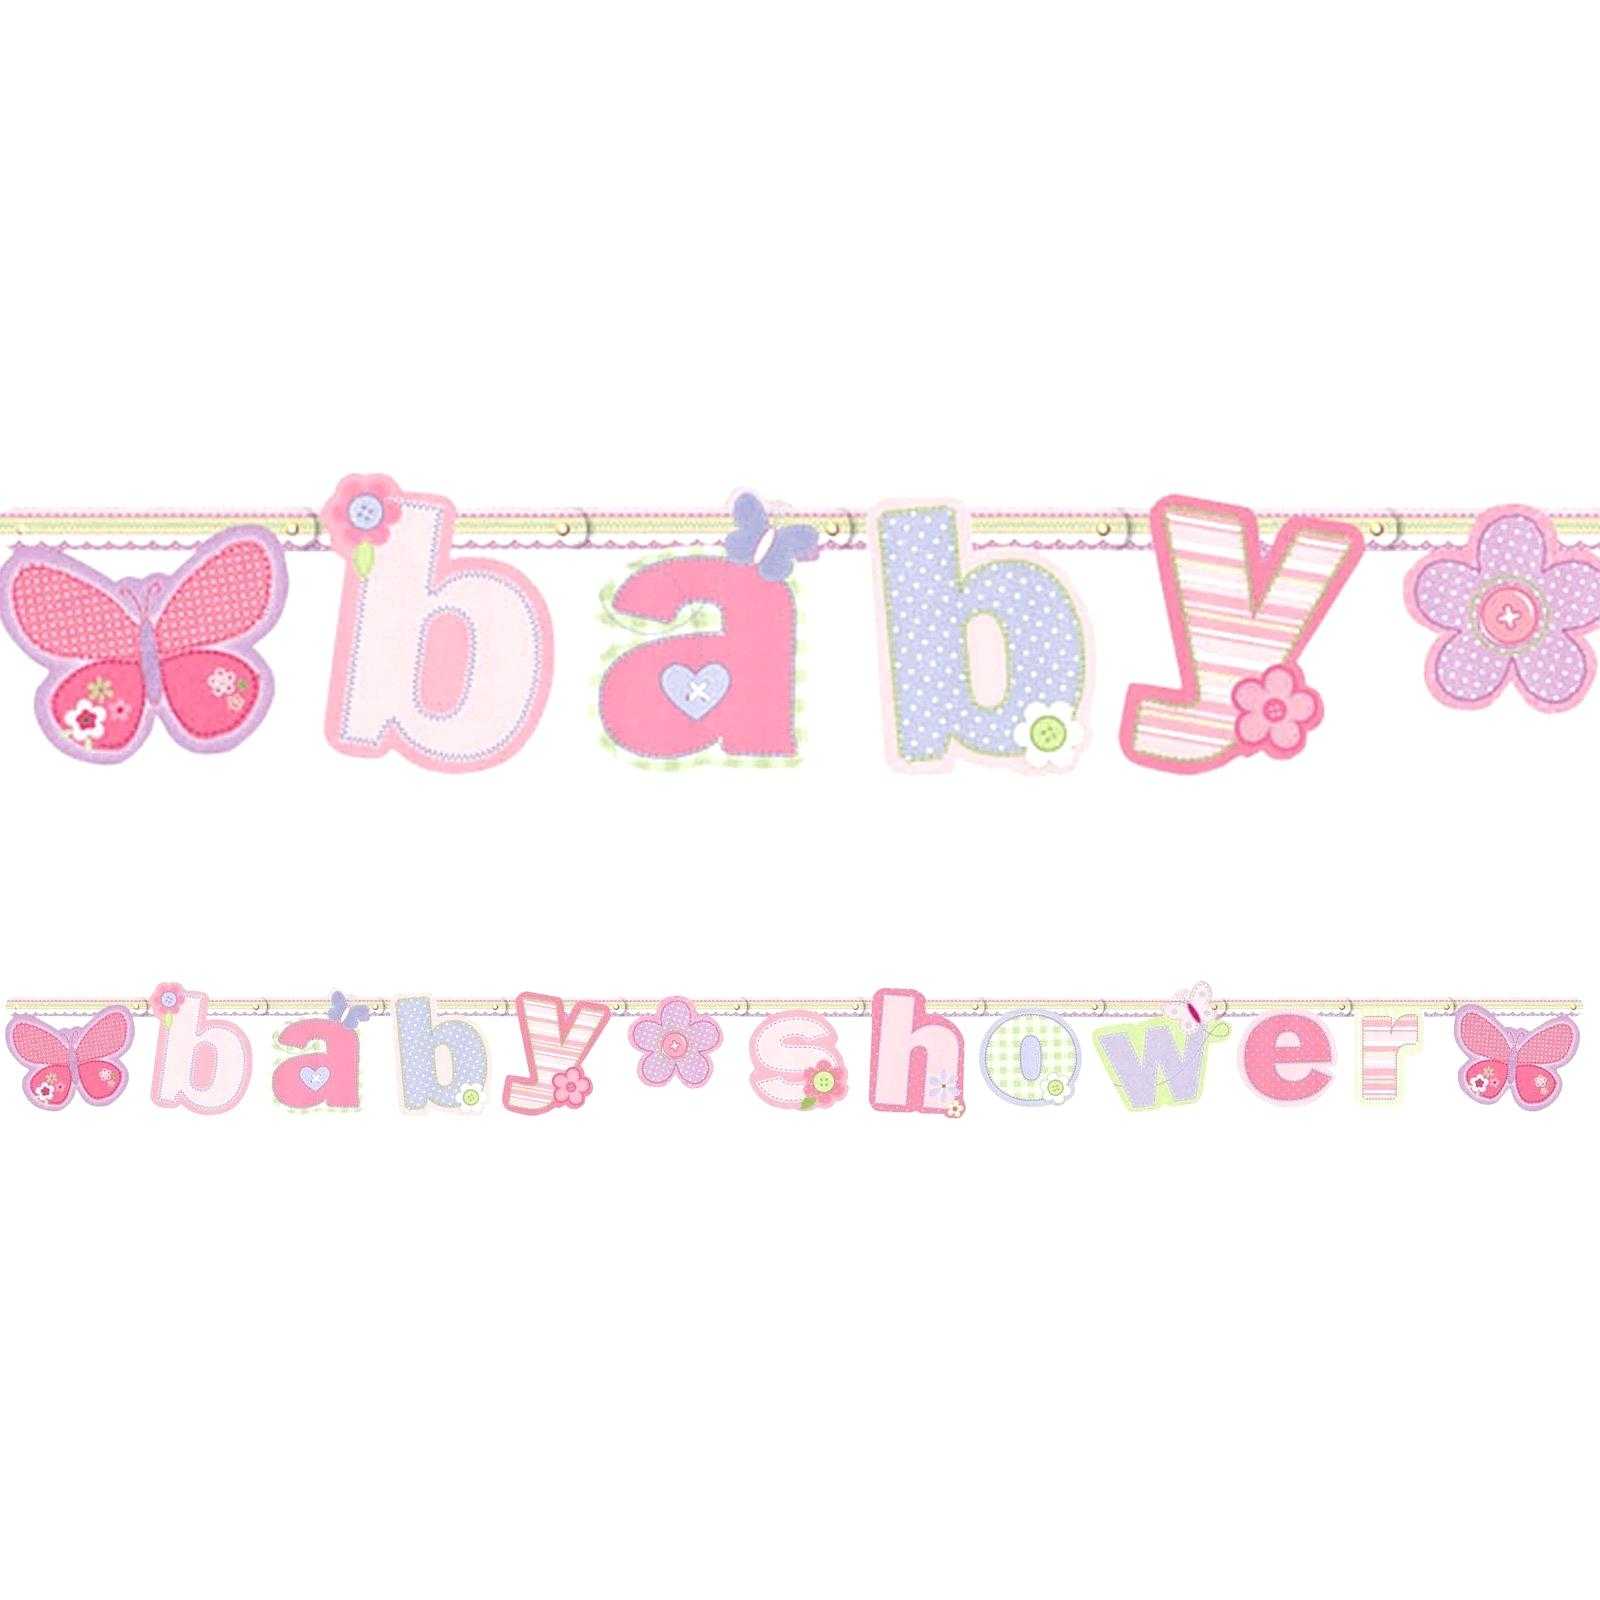 Baby Shower Banner Template Free | Handmade | Zblogowani Inside Free Bridal Shower Banner Template